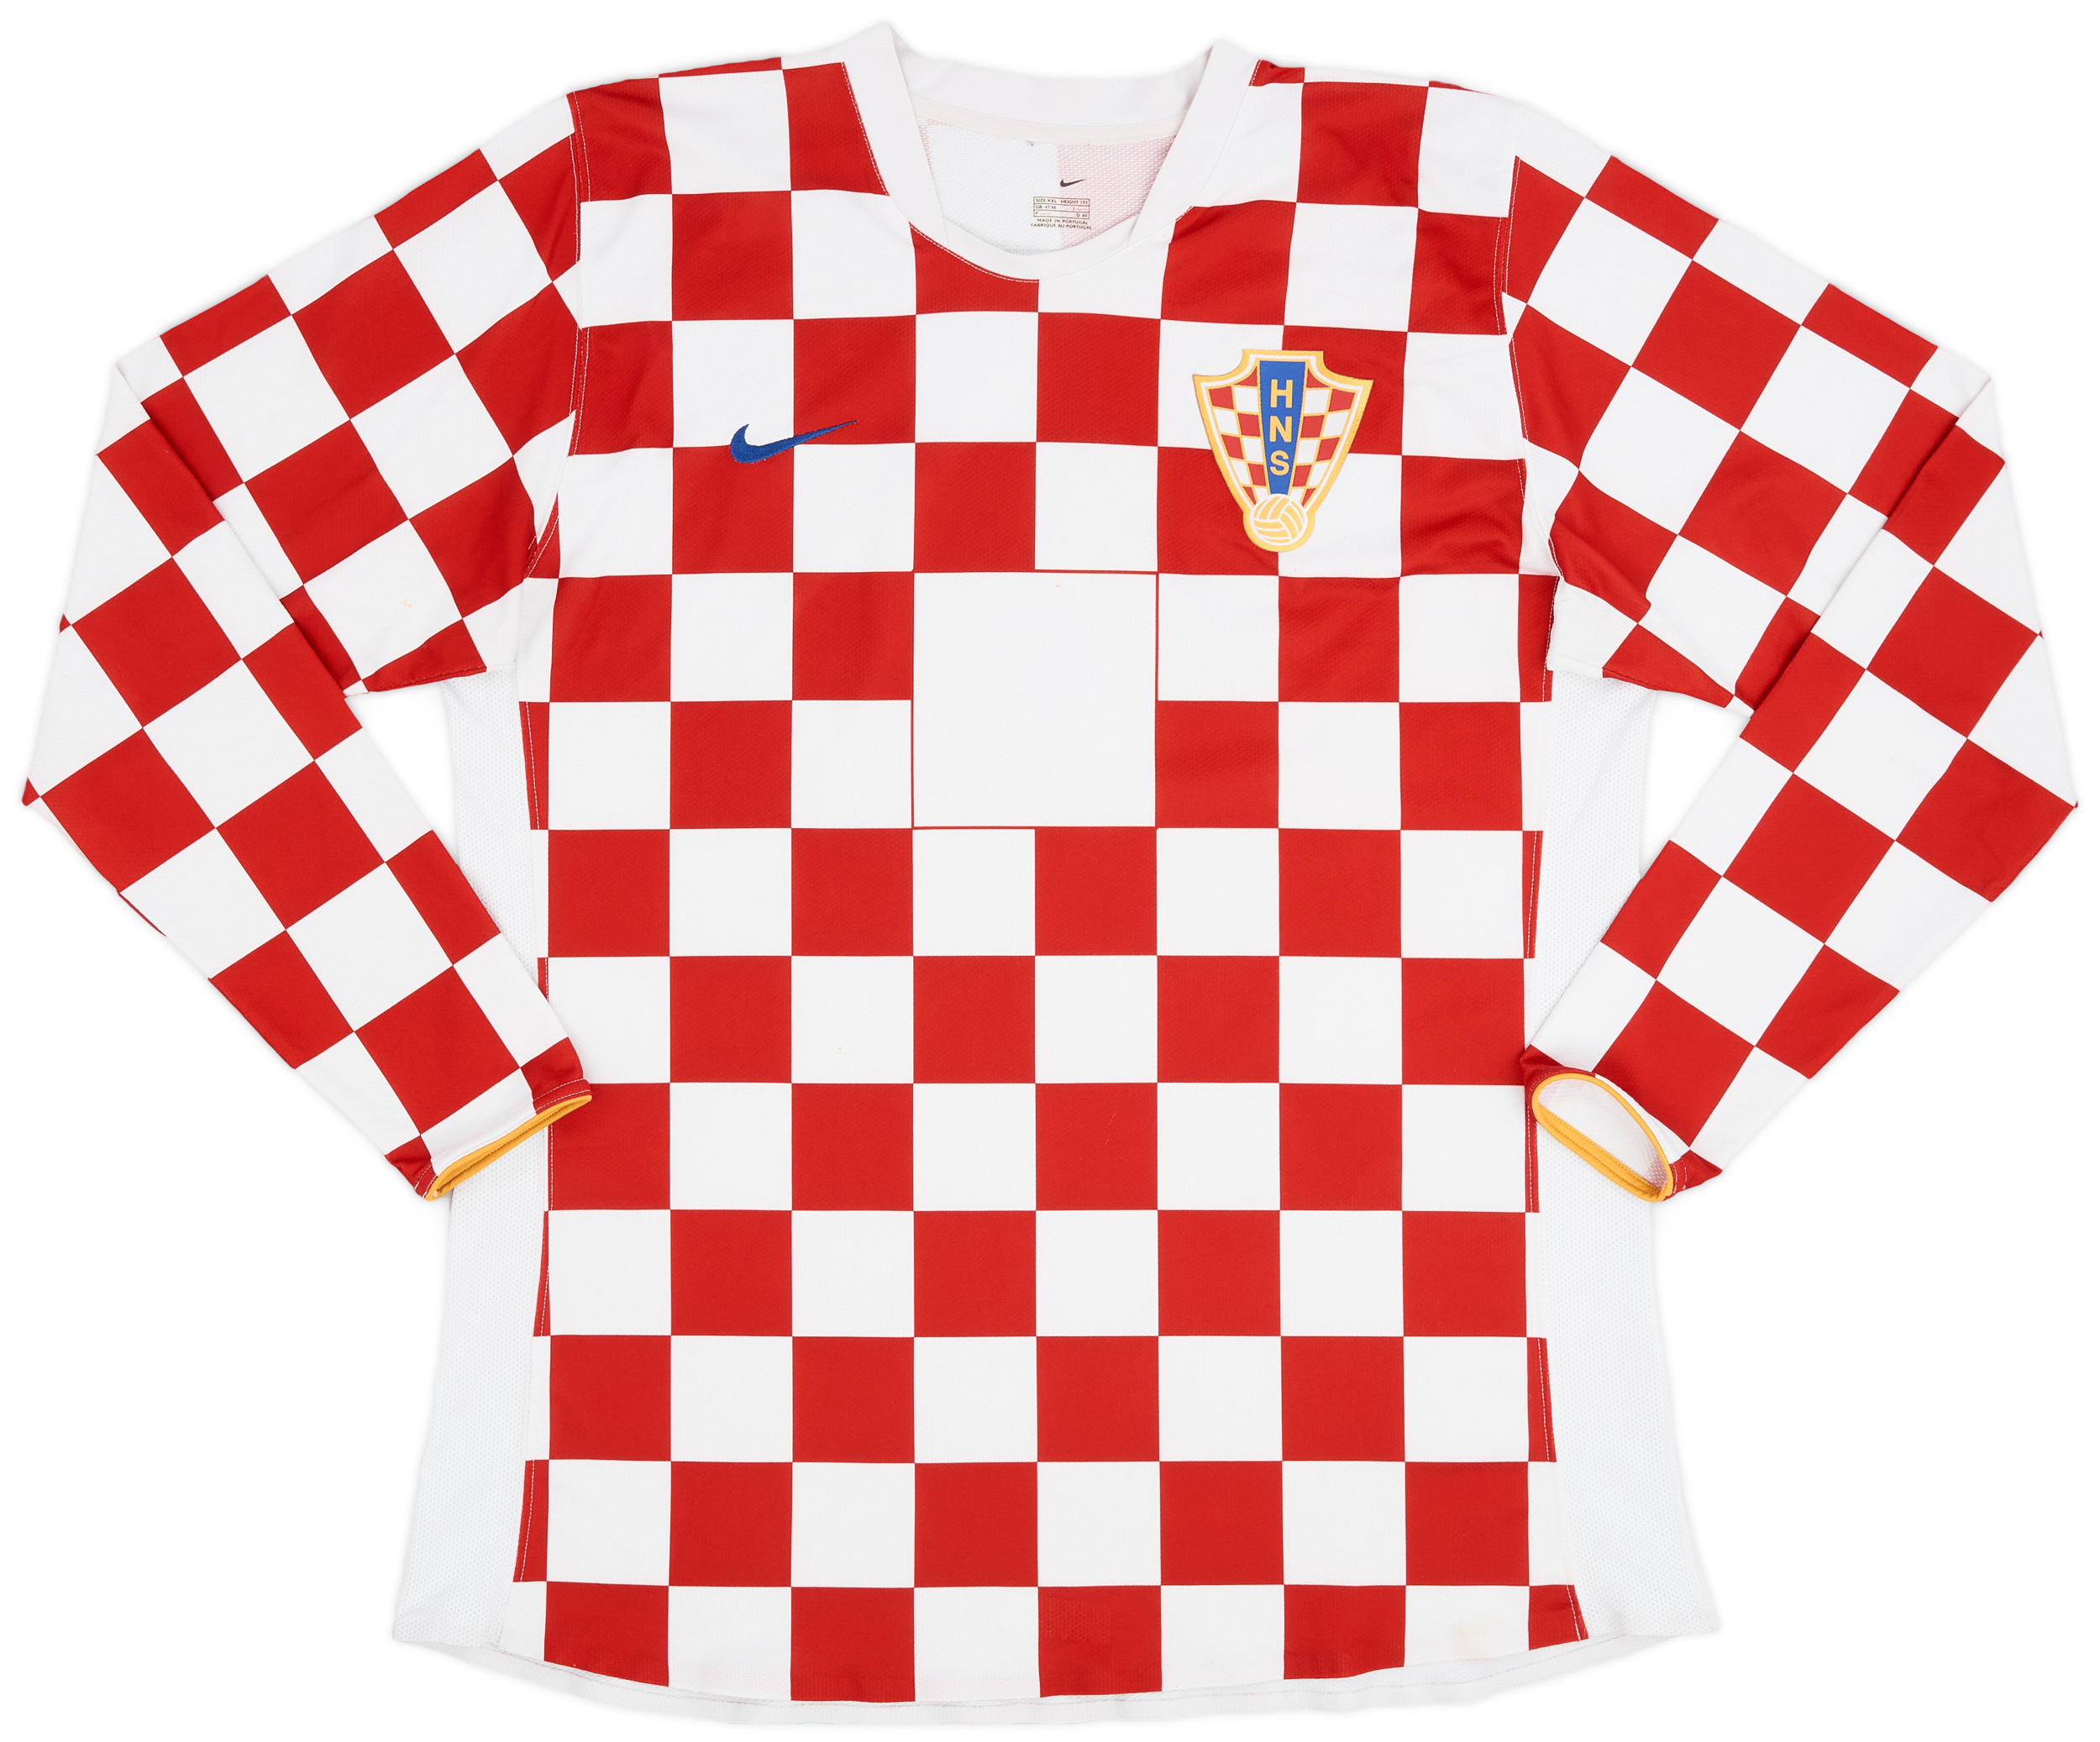 2006-08 Croatia Player Issue Home Shirt - 8/10 - ()